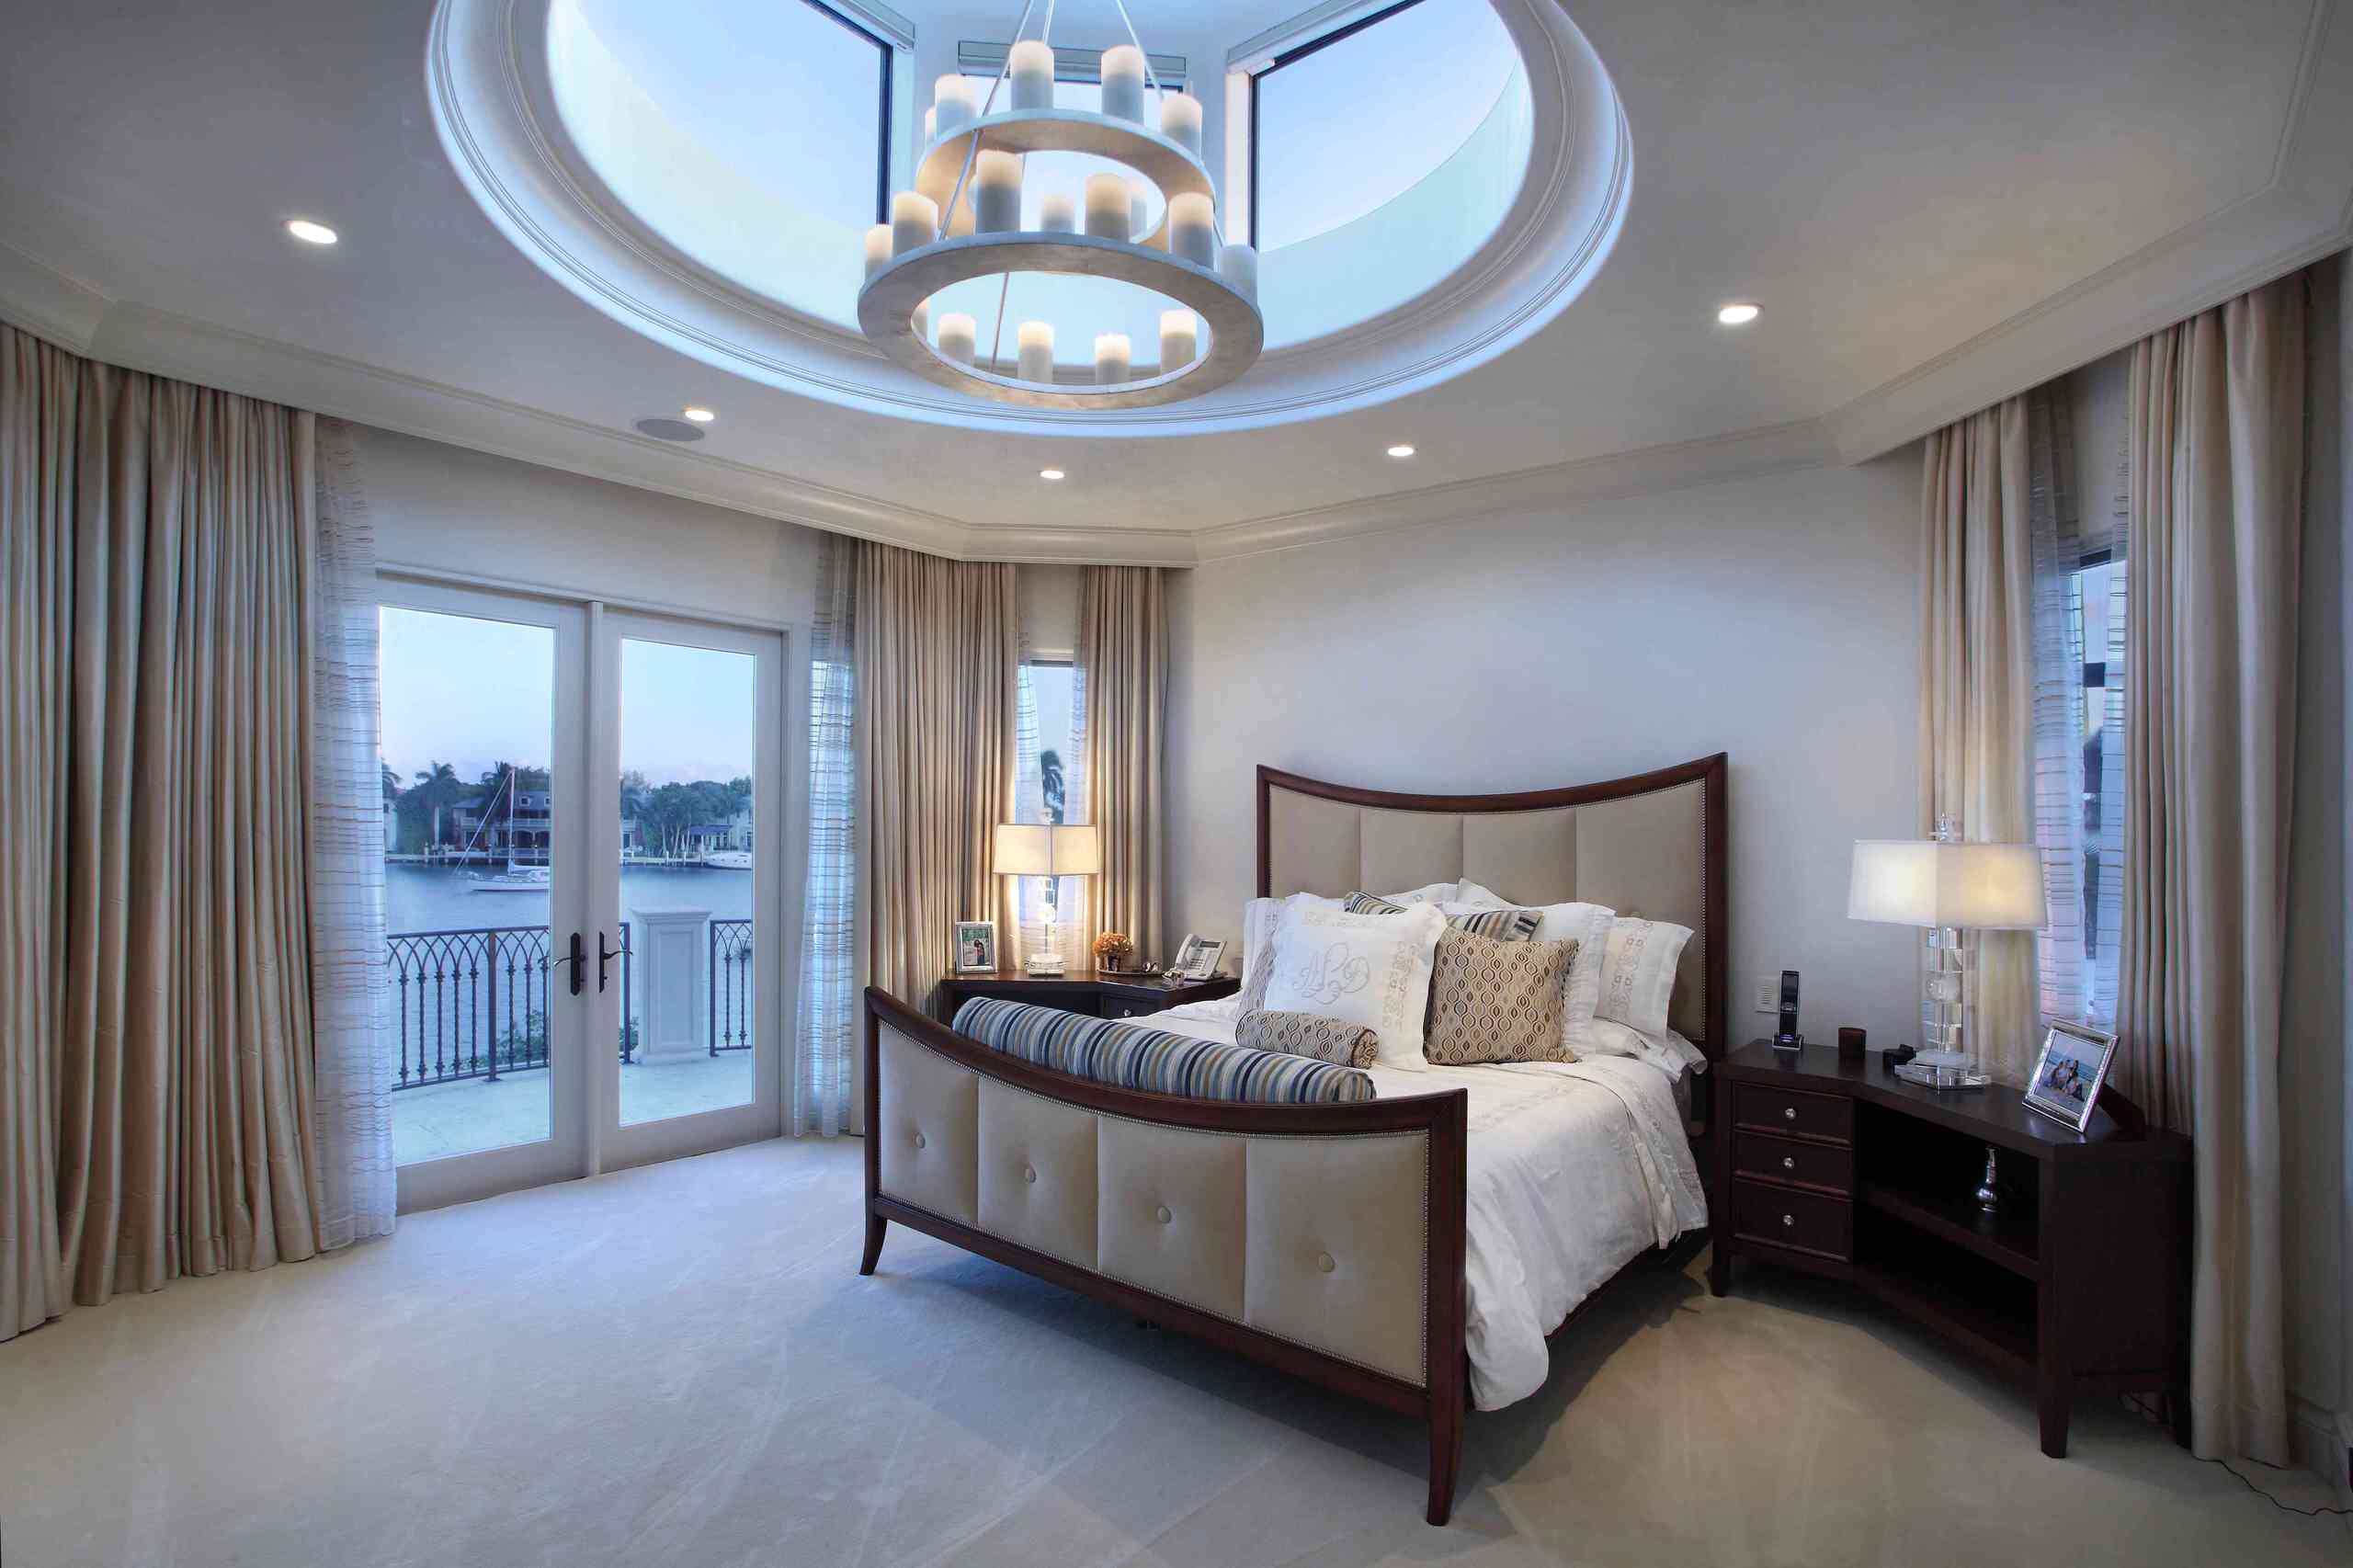 Luxurious Style Bedroom